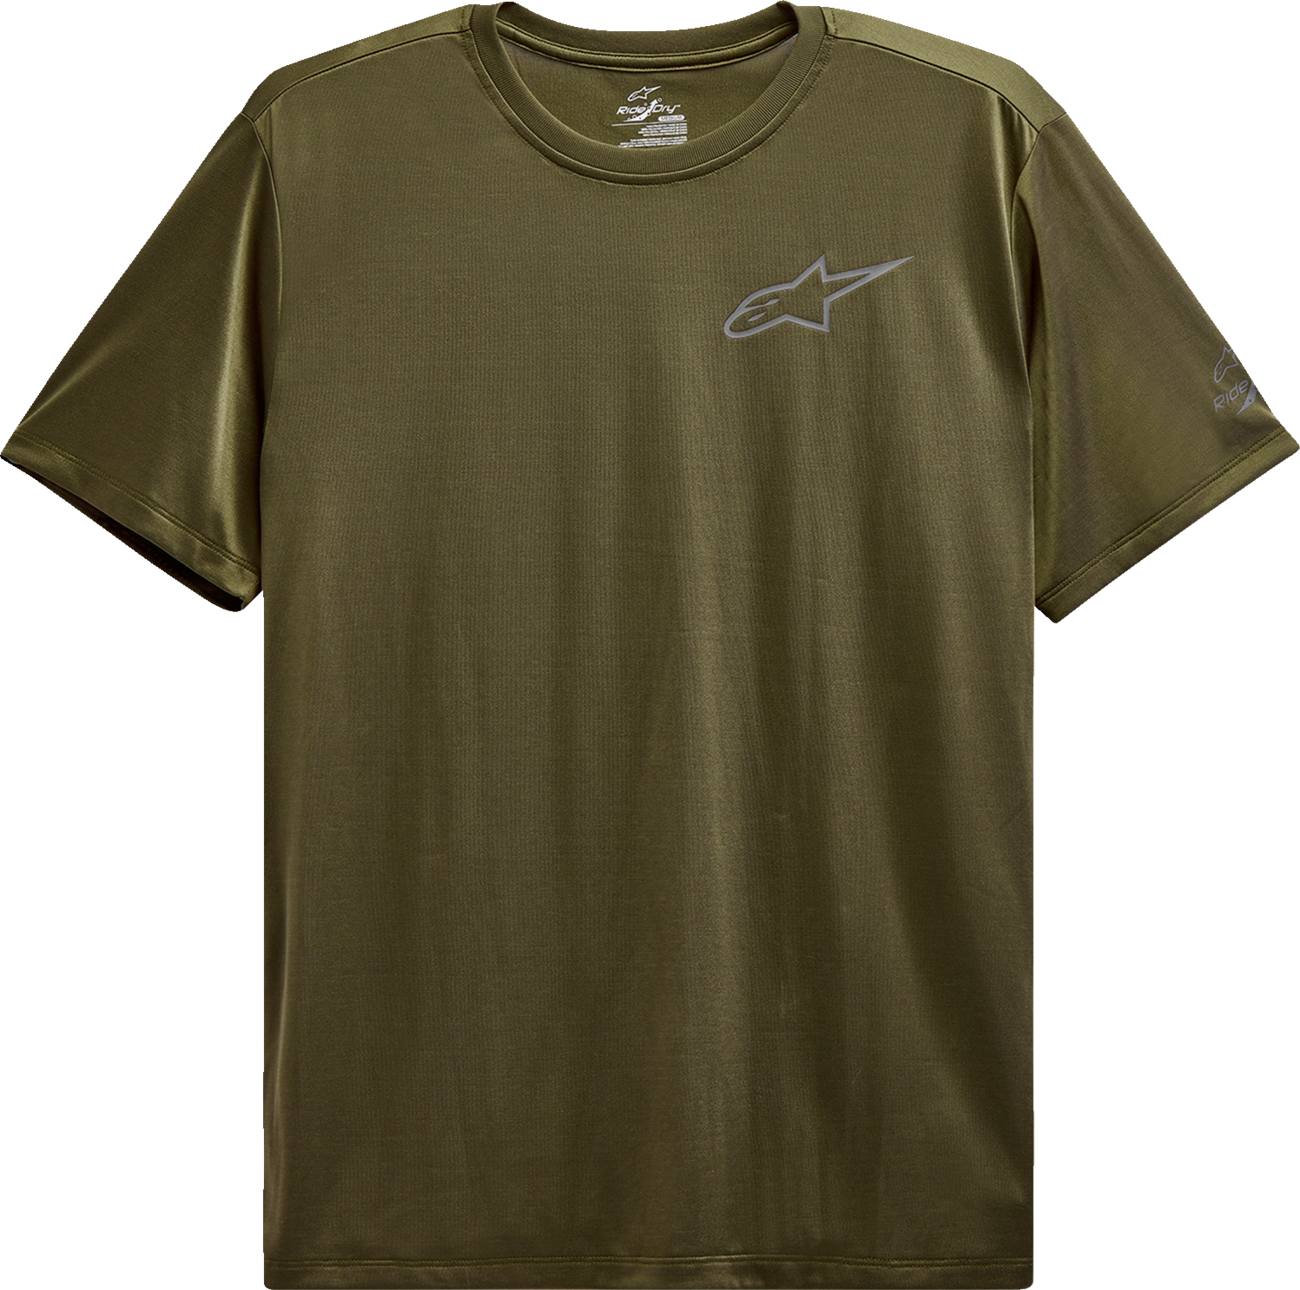 ALPINESTARS Pursue Performance T-Shirt - Military Green - Medium 123272010690M